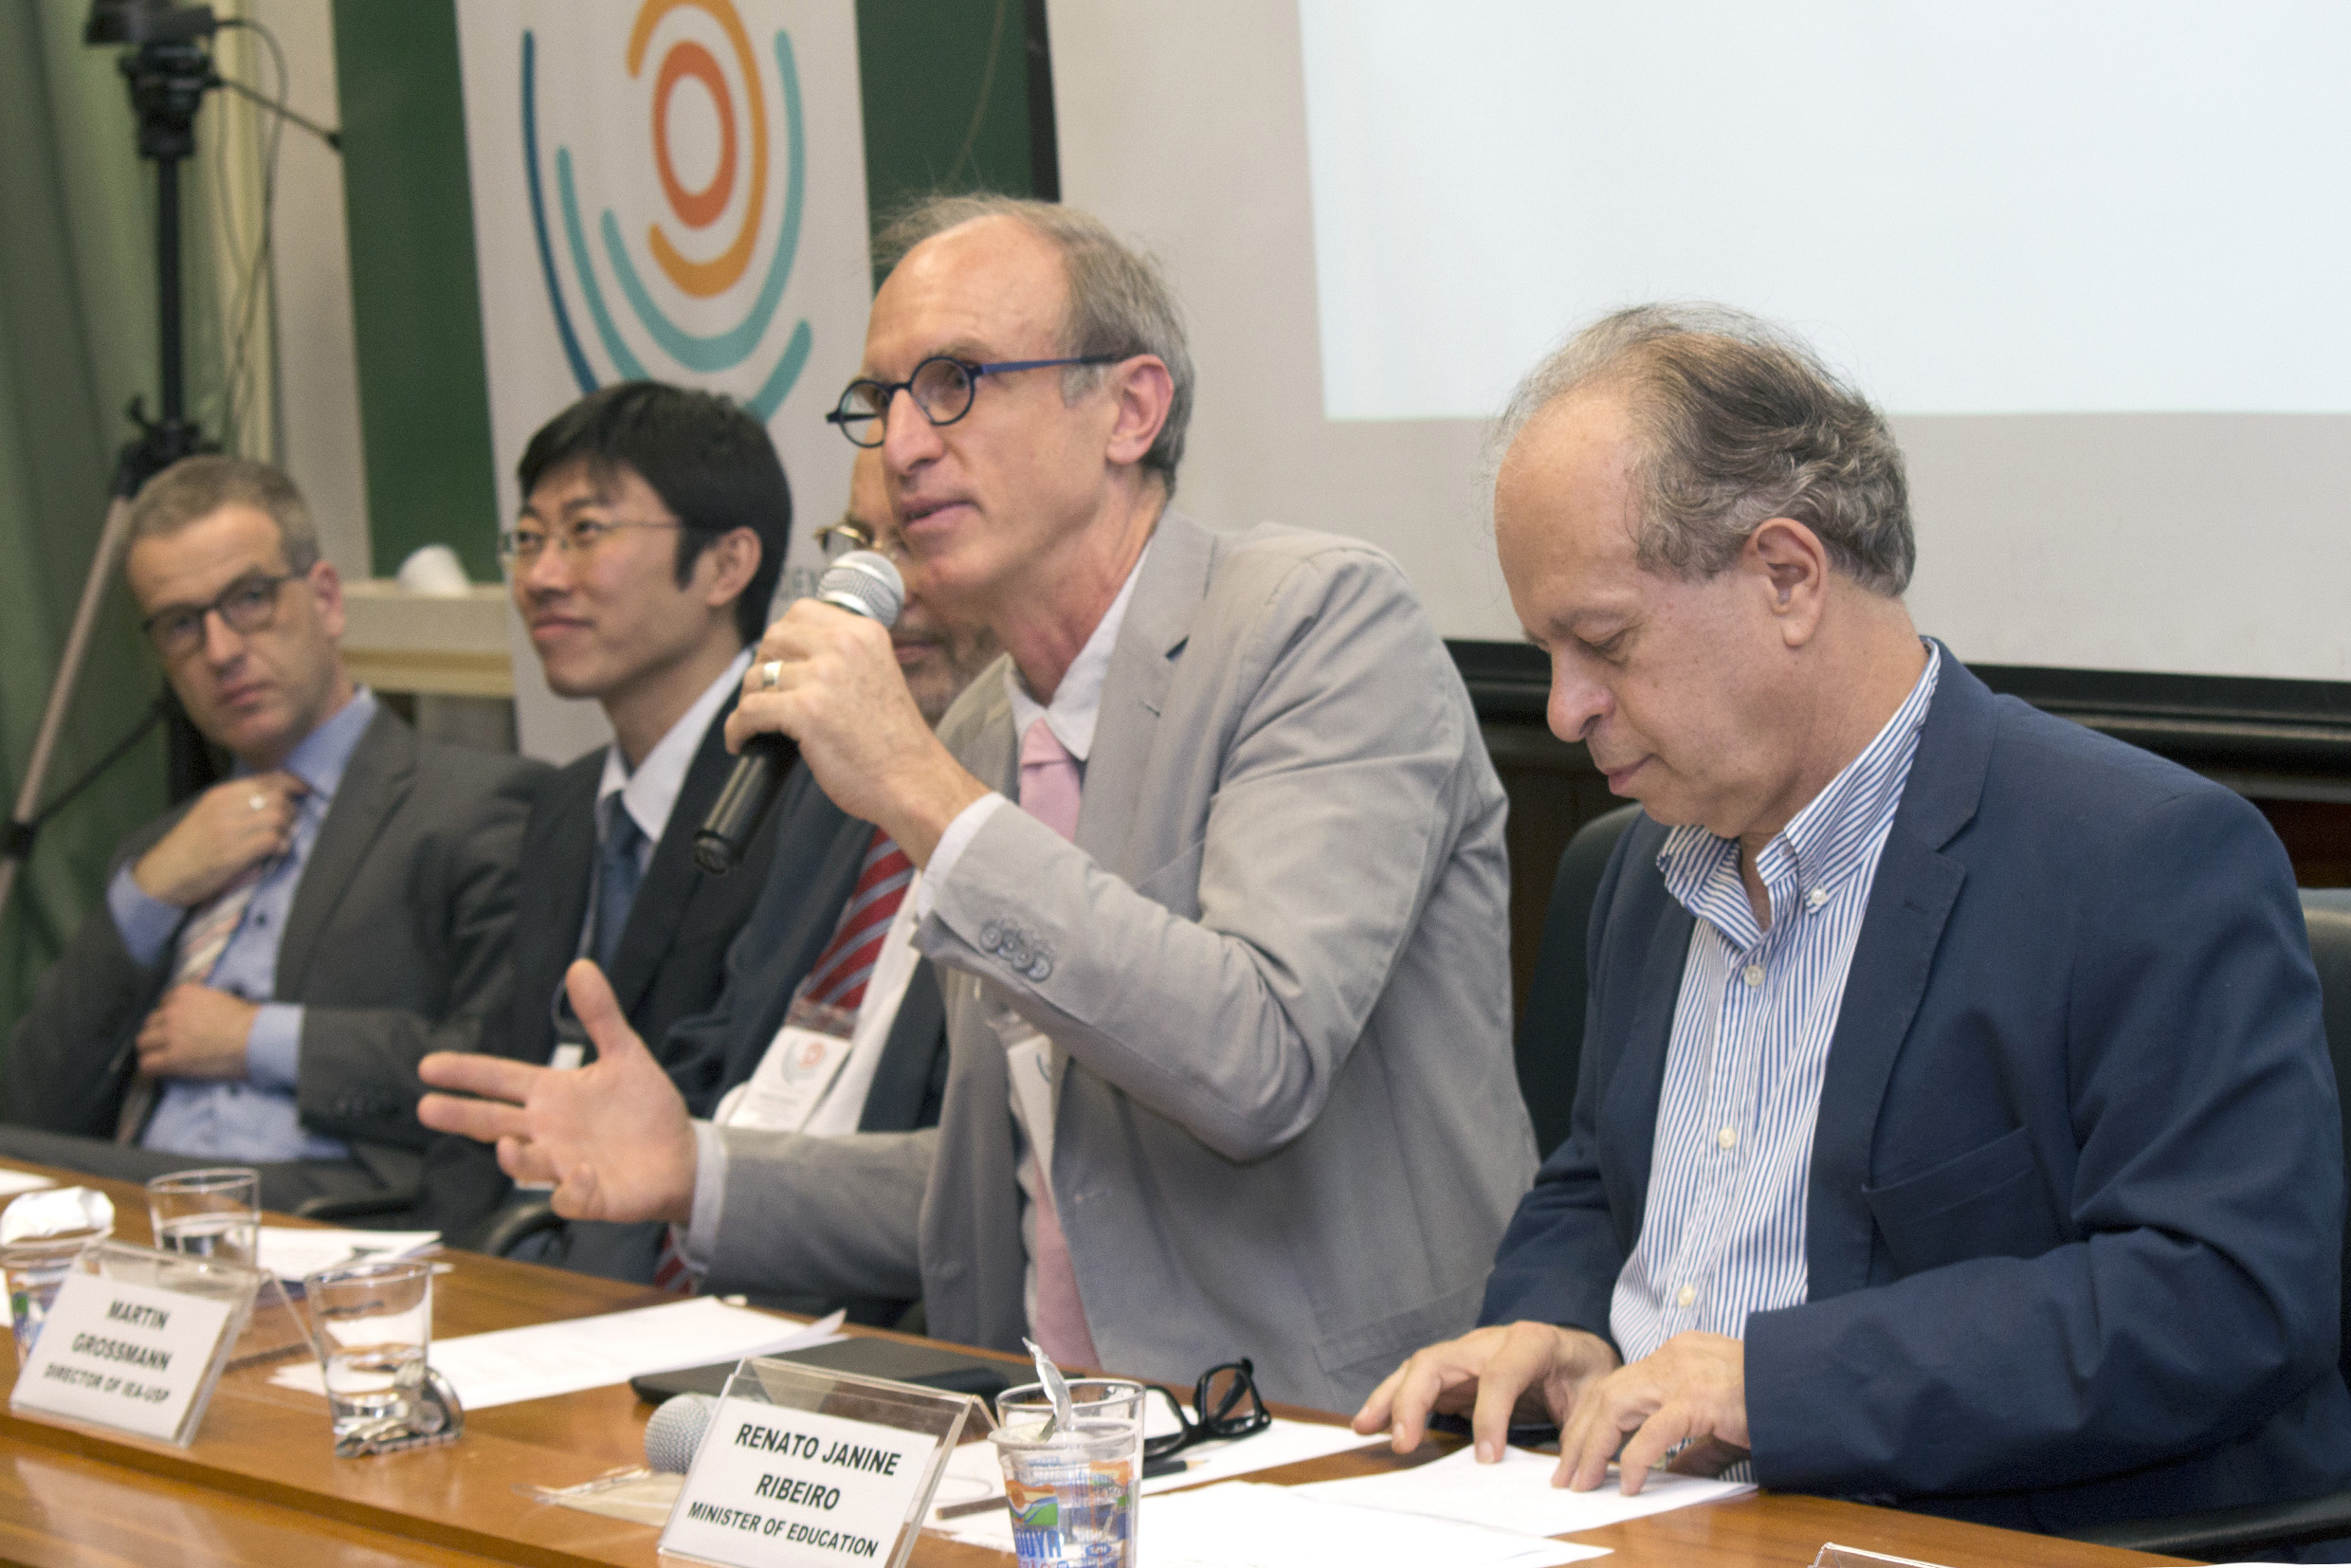 Carsten Dose, Dapeng Cai, Martin Grossmann and Minister Renato Janine Ribeiro